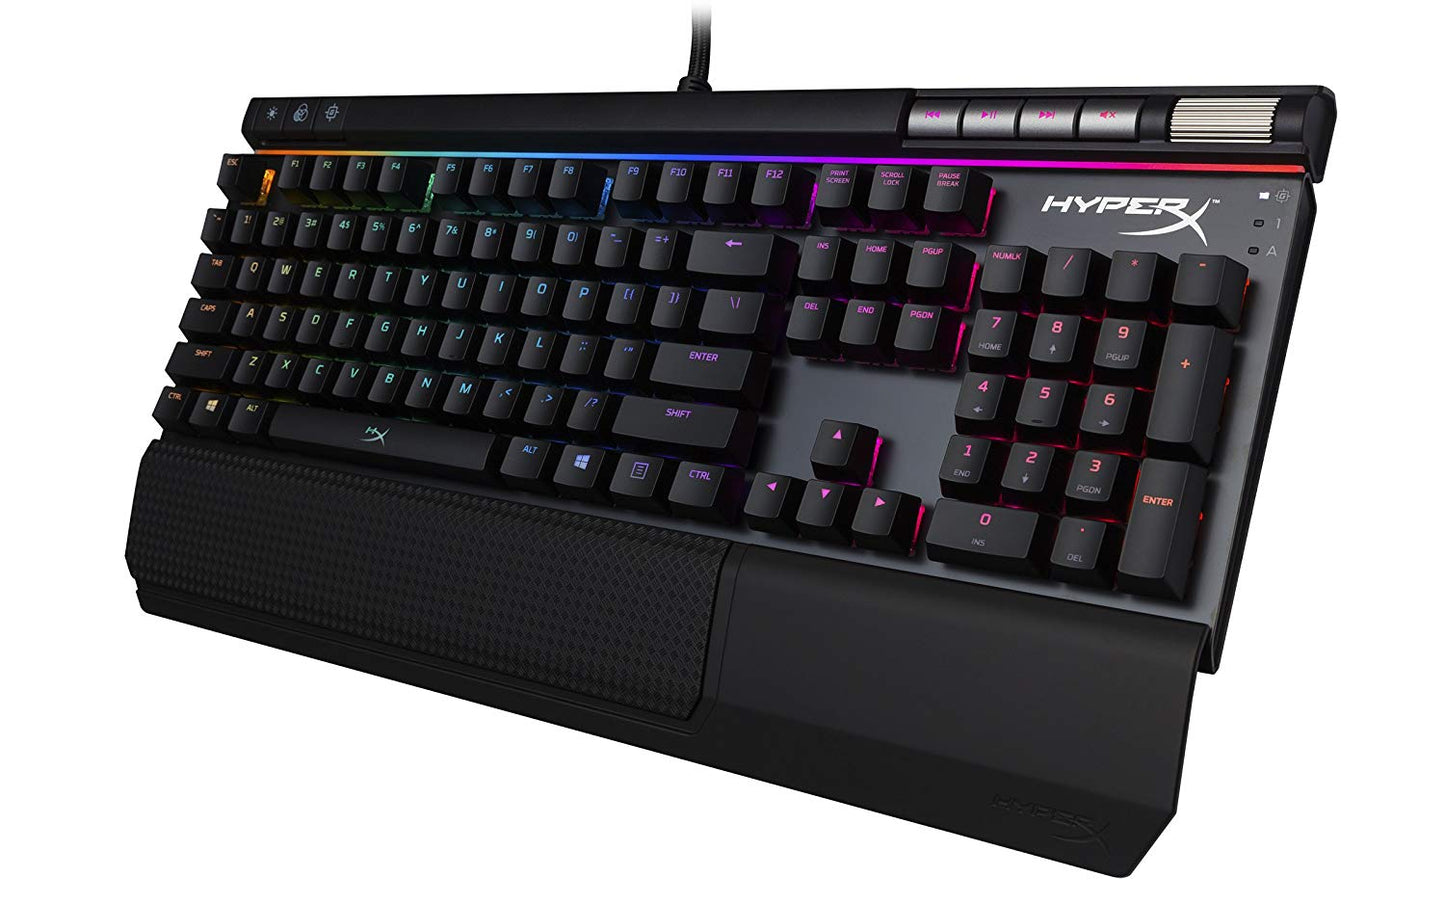 HyperX Alloy Elite RGB LED Cherry MX Red Mechanical Gaming Keyboard (Black)